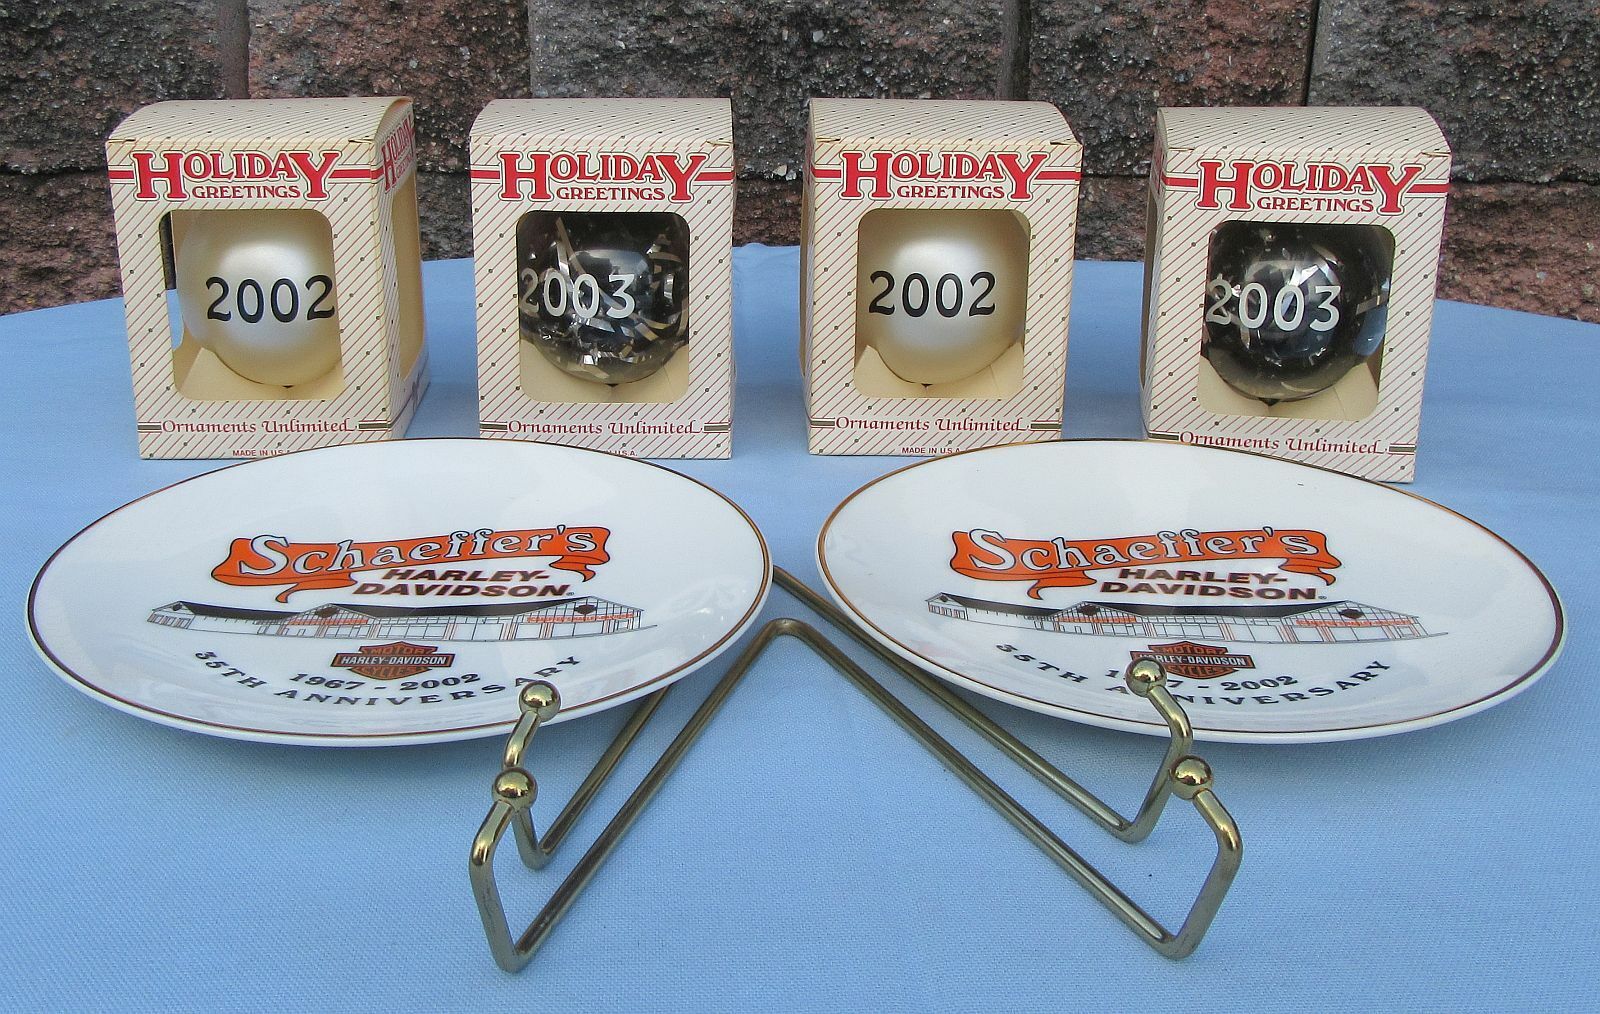 Vintage 2002 2003 Schaeffer's Harley Davidson Ornaments &35th Anniversary Plates